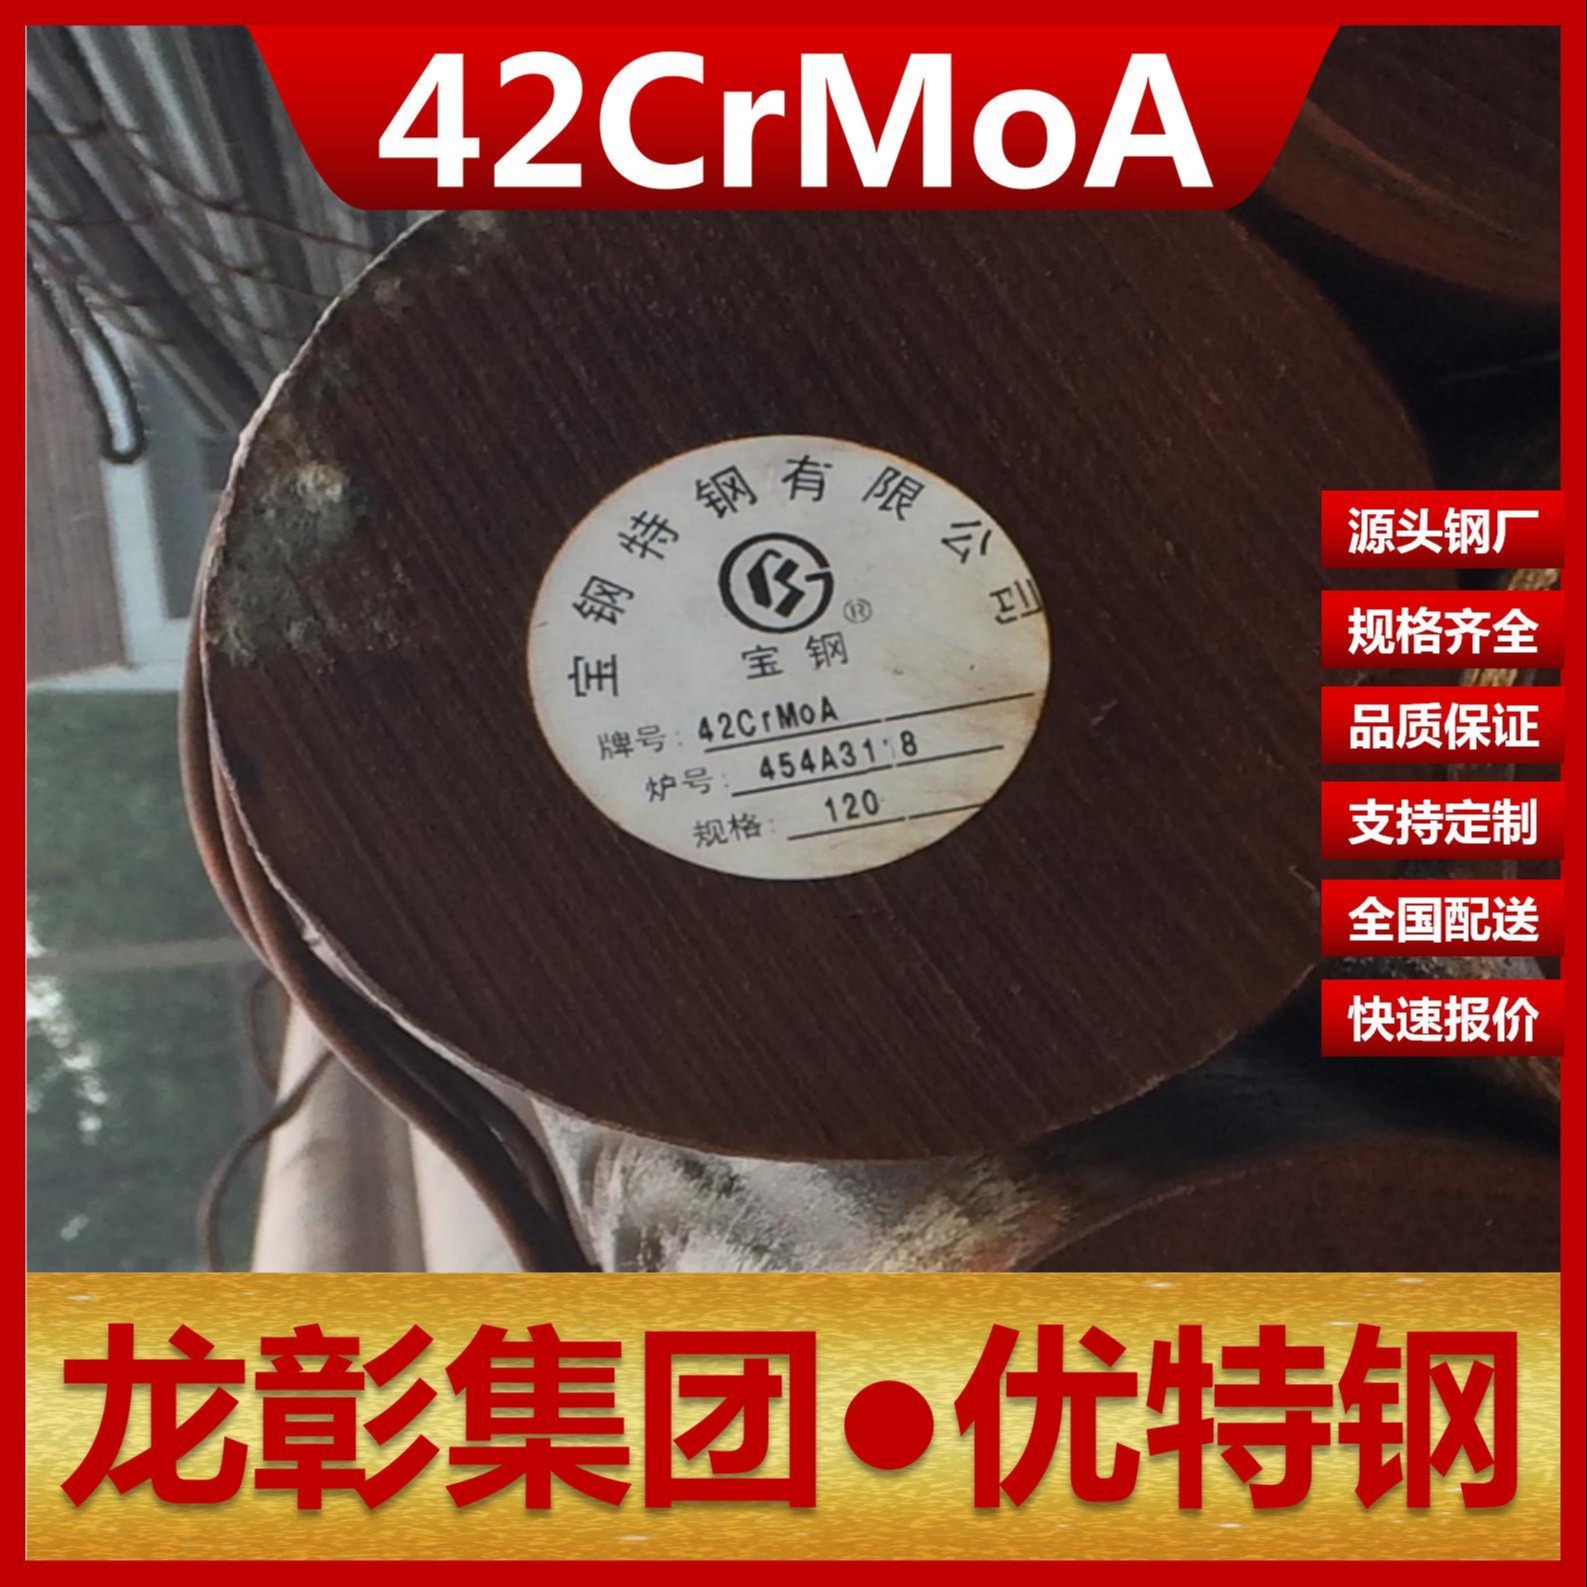 42CrMoA圆钢现货批零 龙彰集团主营42CrMoA圆钢棒支持定制锻件